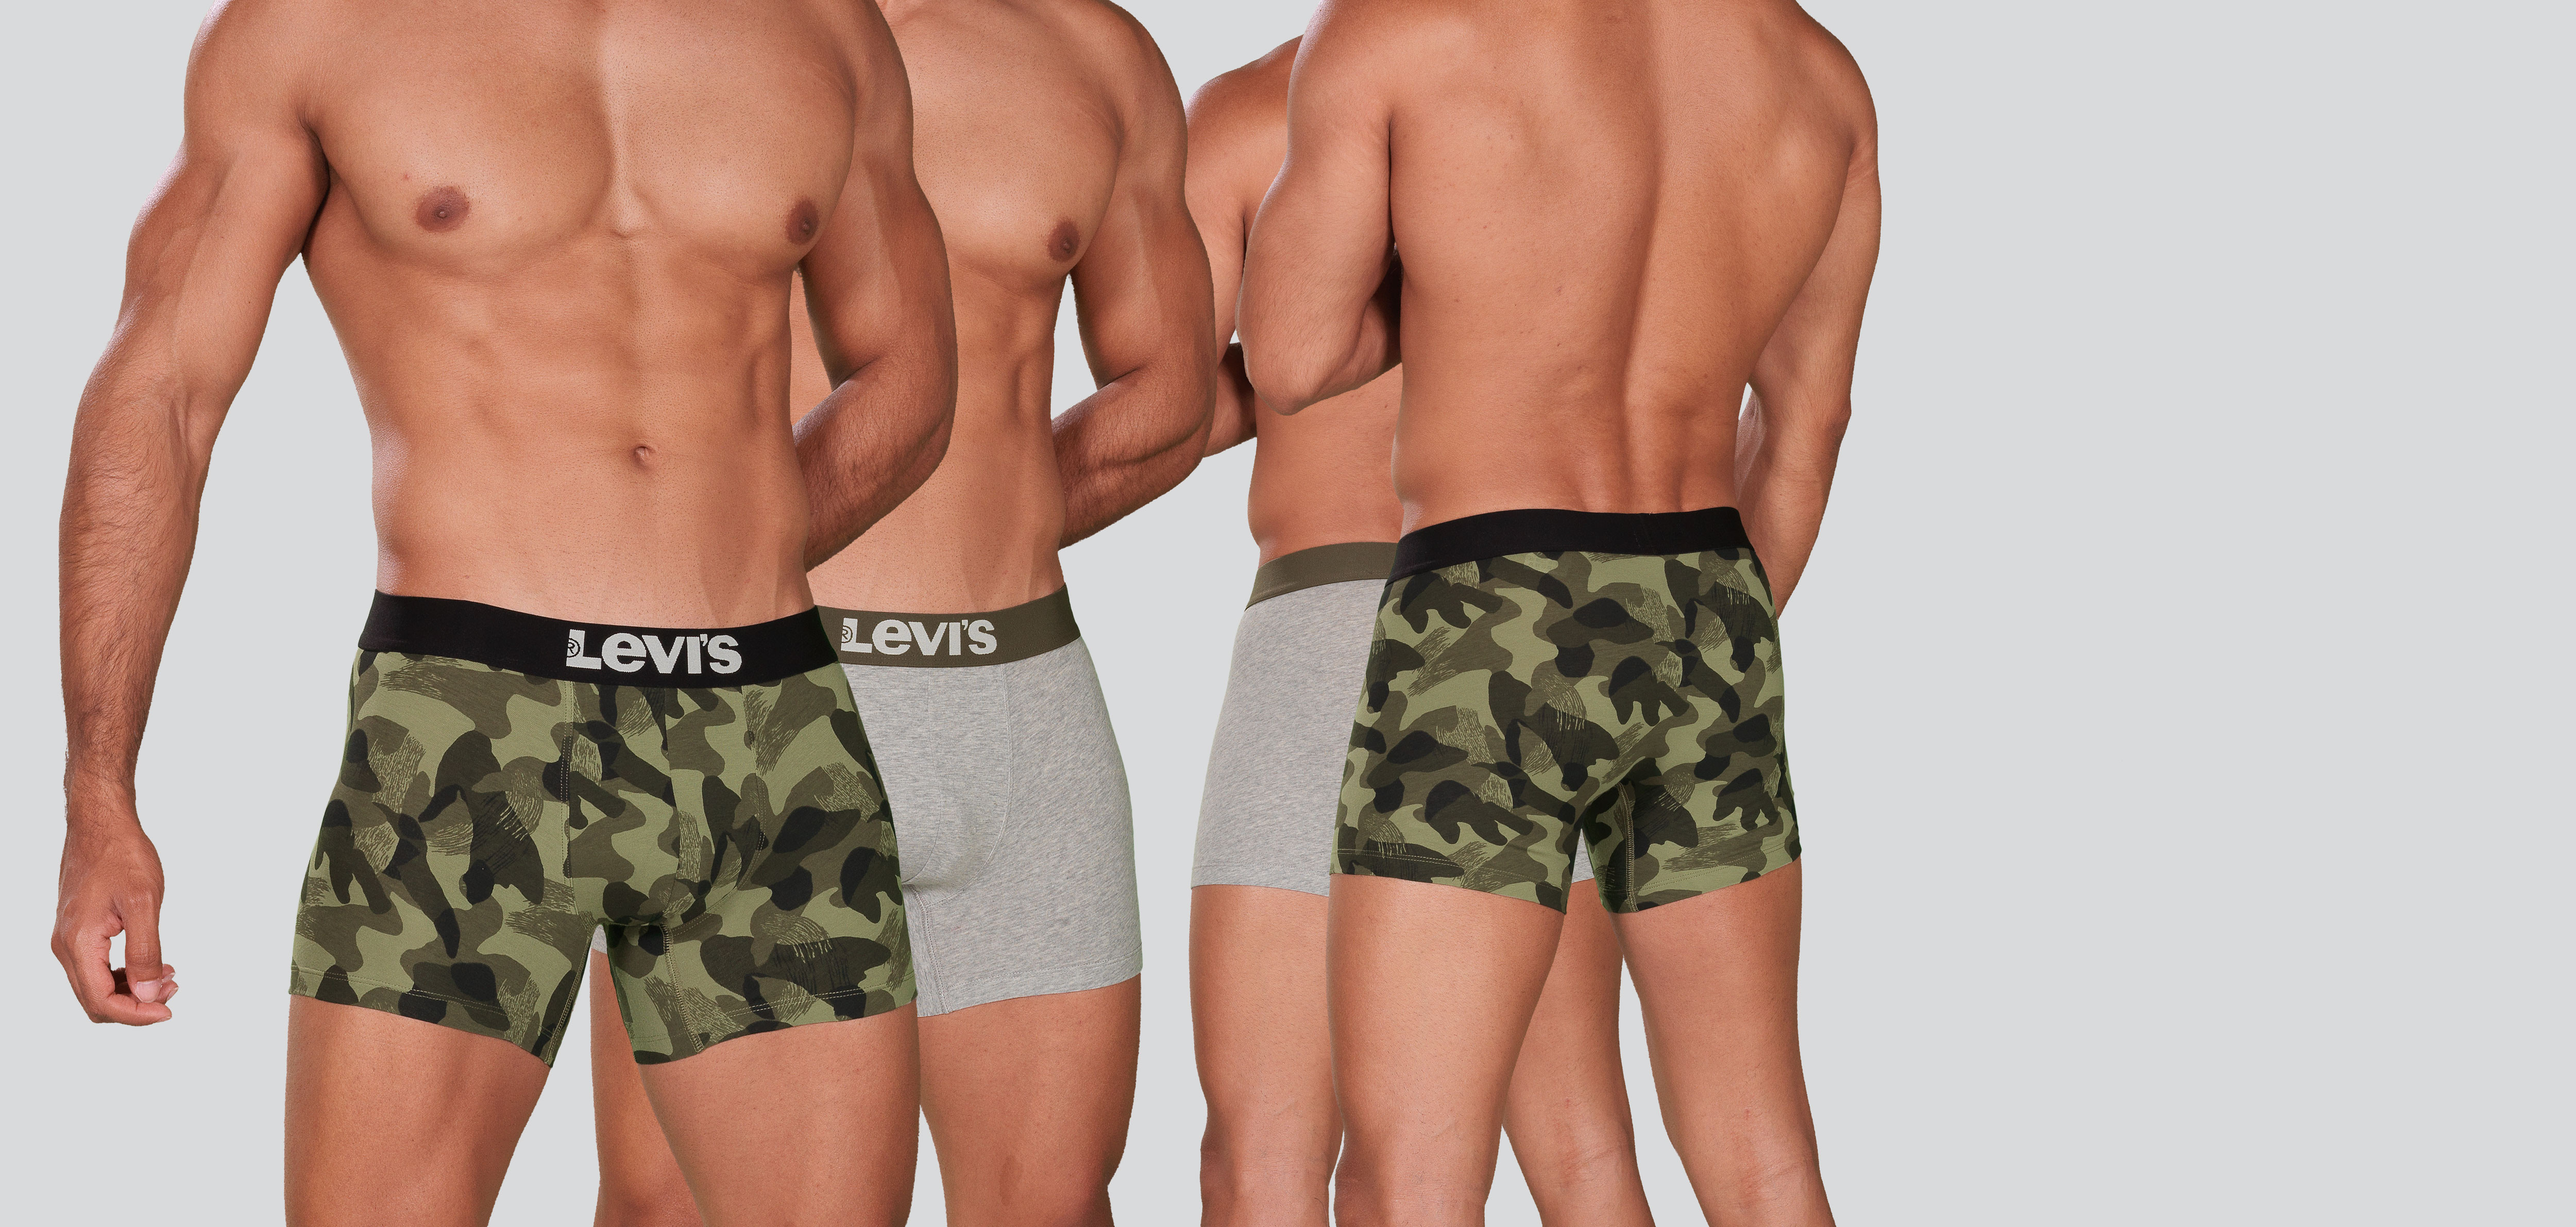 Levi_s Camouflage AOP Boxer Brief 2-Pack 6001